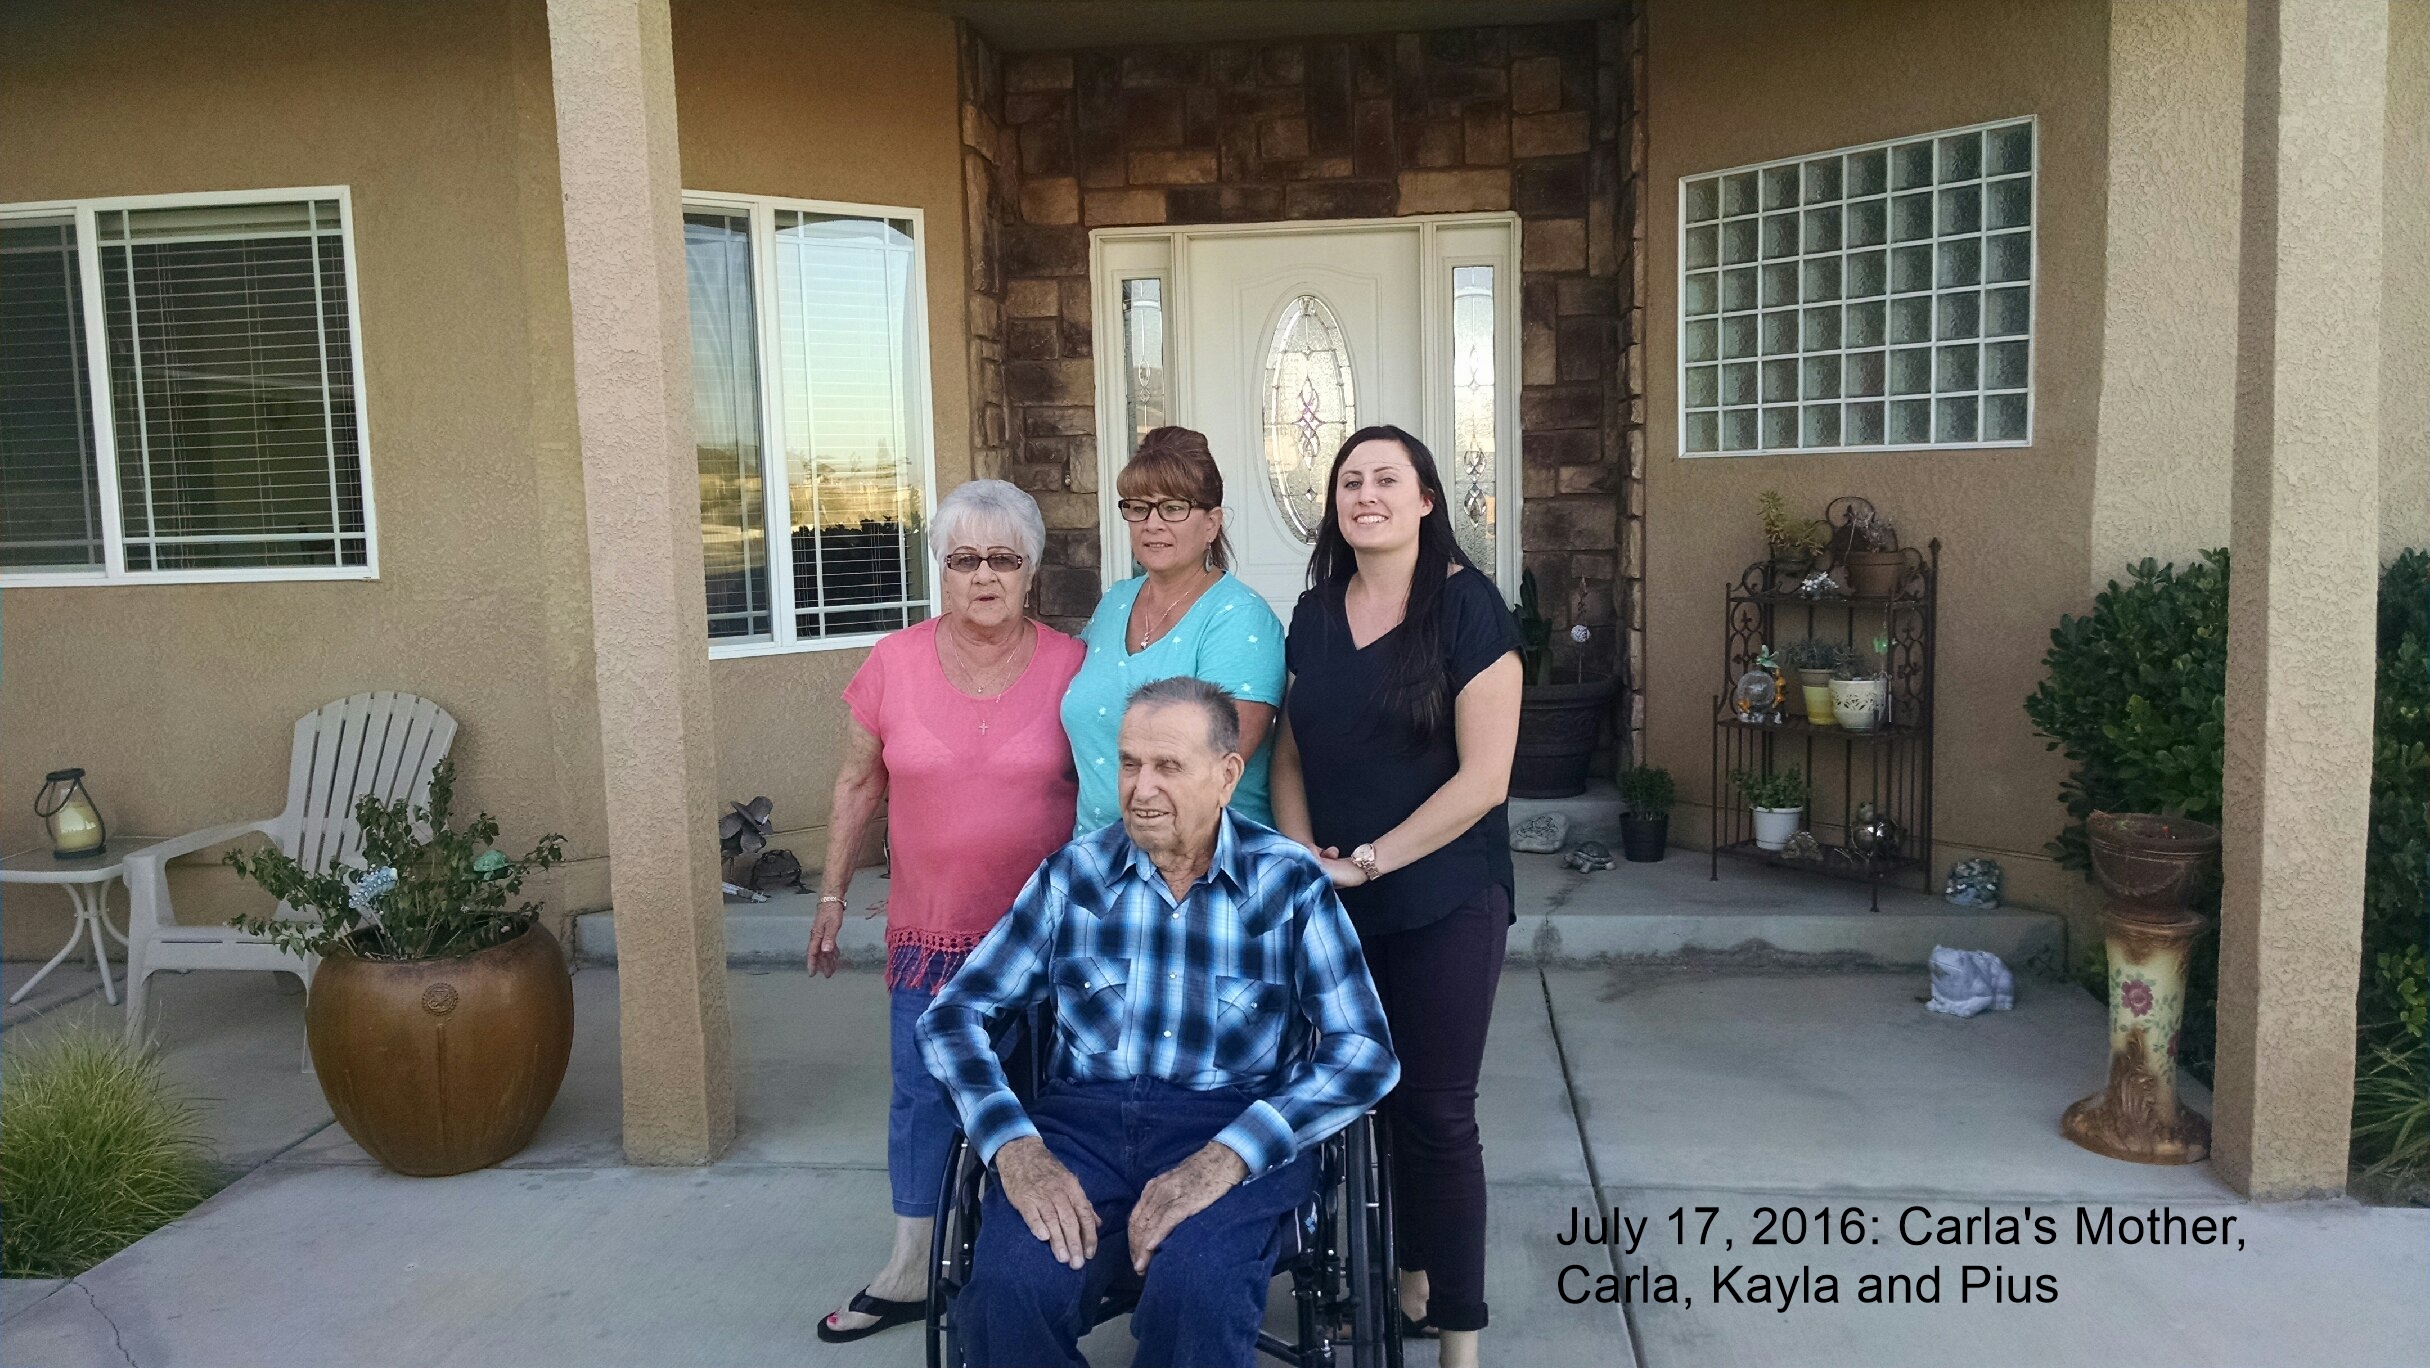 Carla, her Mom, Kayla and Pius, July 17, 2016.